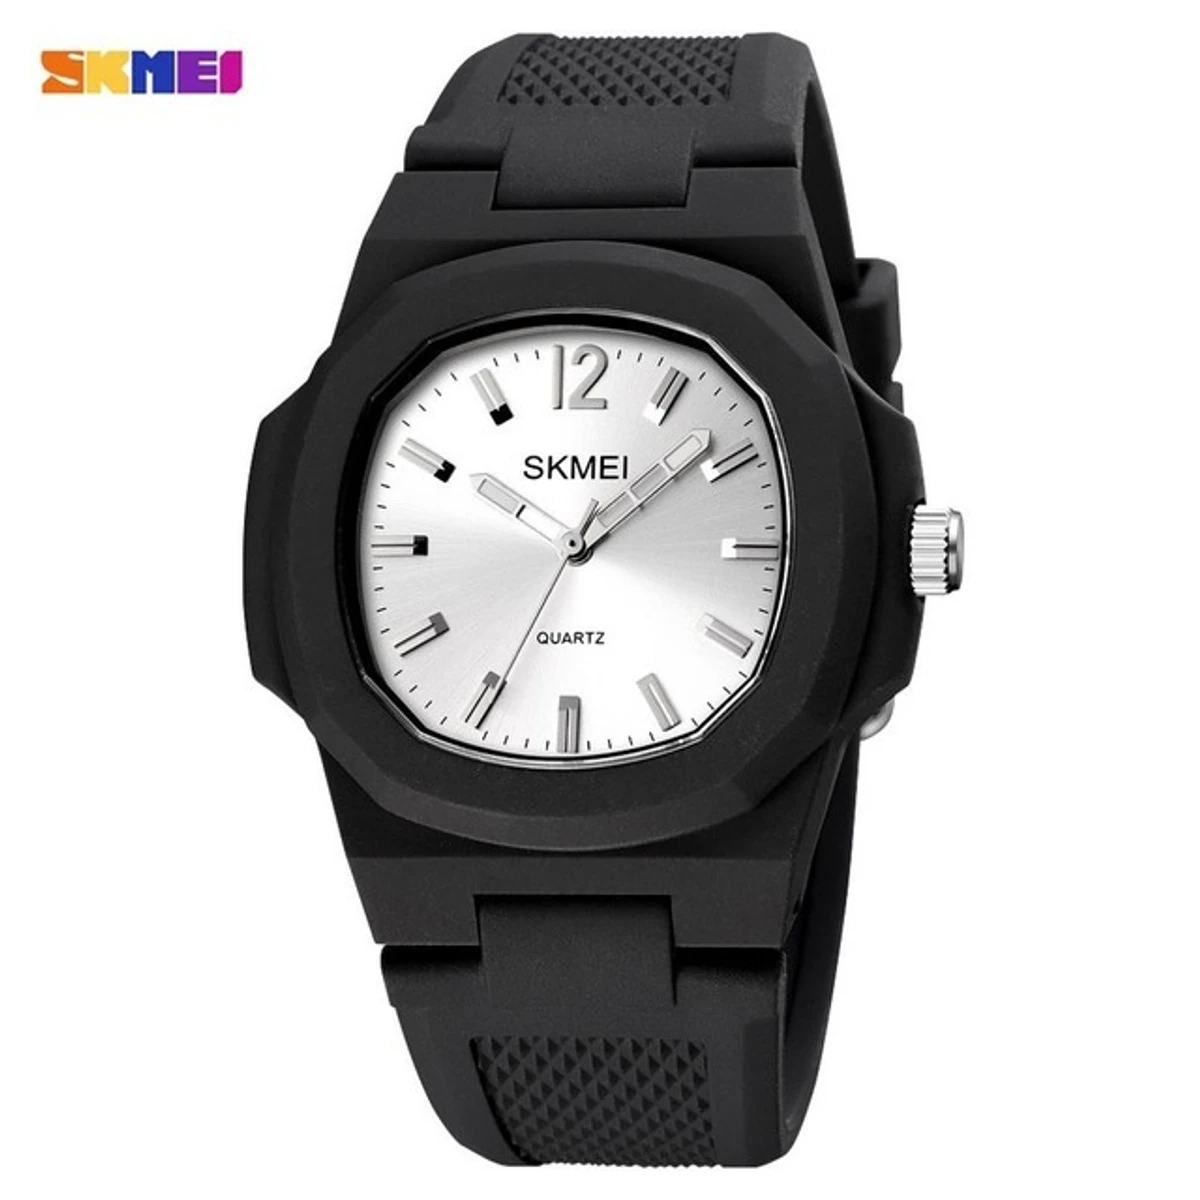 SKMEI Model 1717 Original Watch Retro Silicone Band Casual Analog Quartz Wristwatch 1717 Cool Watches Fashion Waterproof Sport Watch